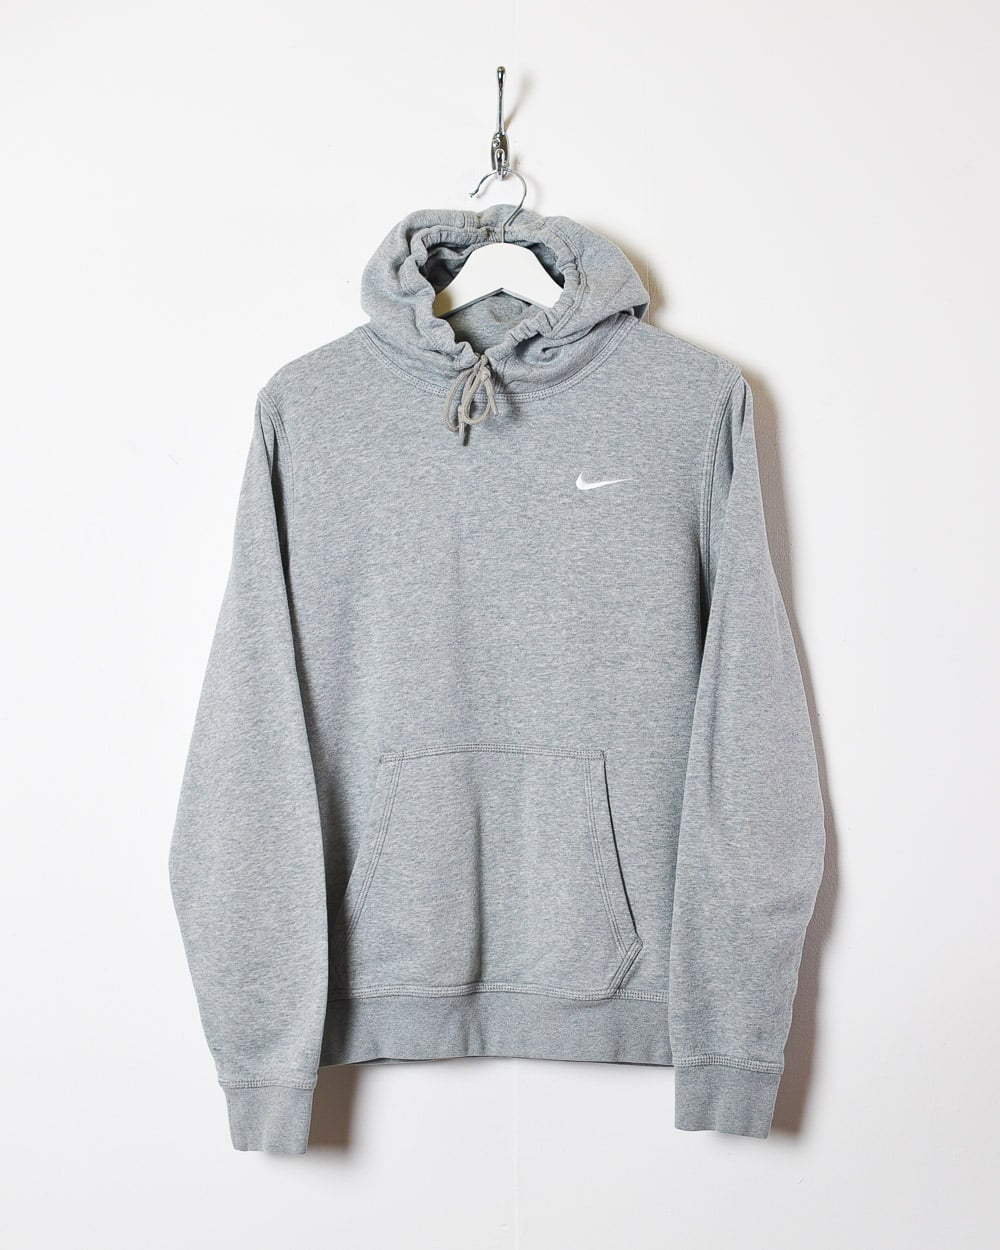 Grey Nike Hoodie - Small